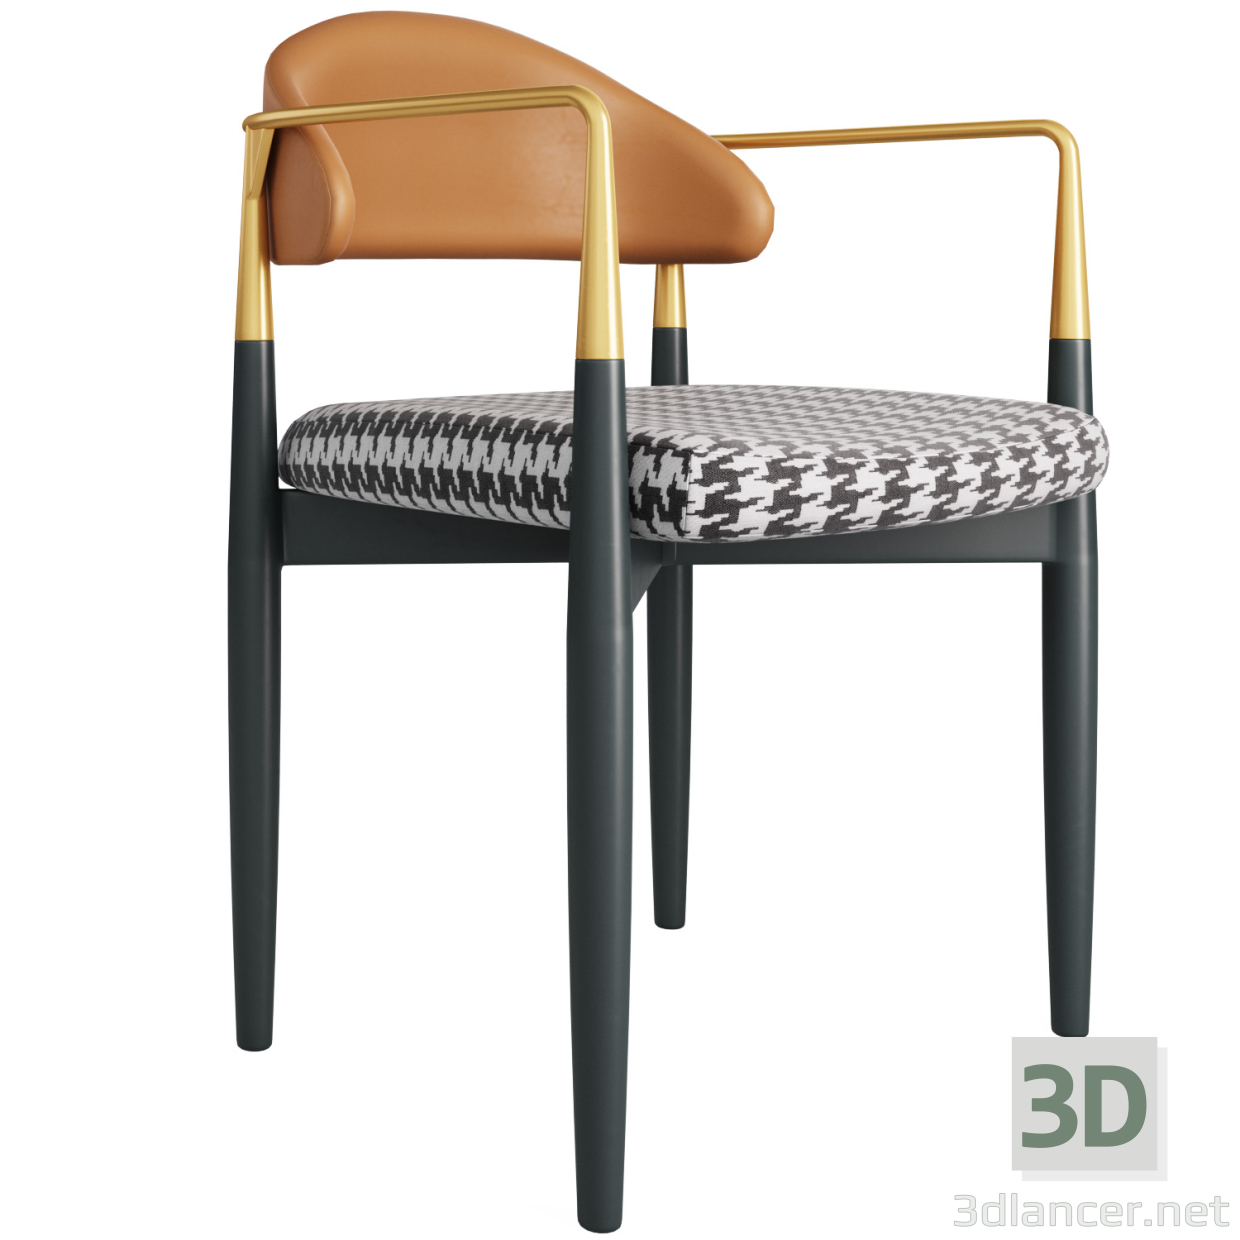 3d Designer chair for living room LaLume MB20769-23 model buy - render